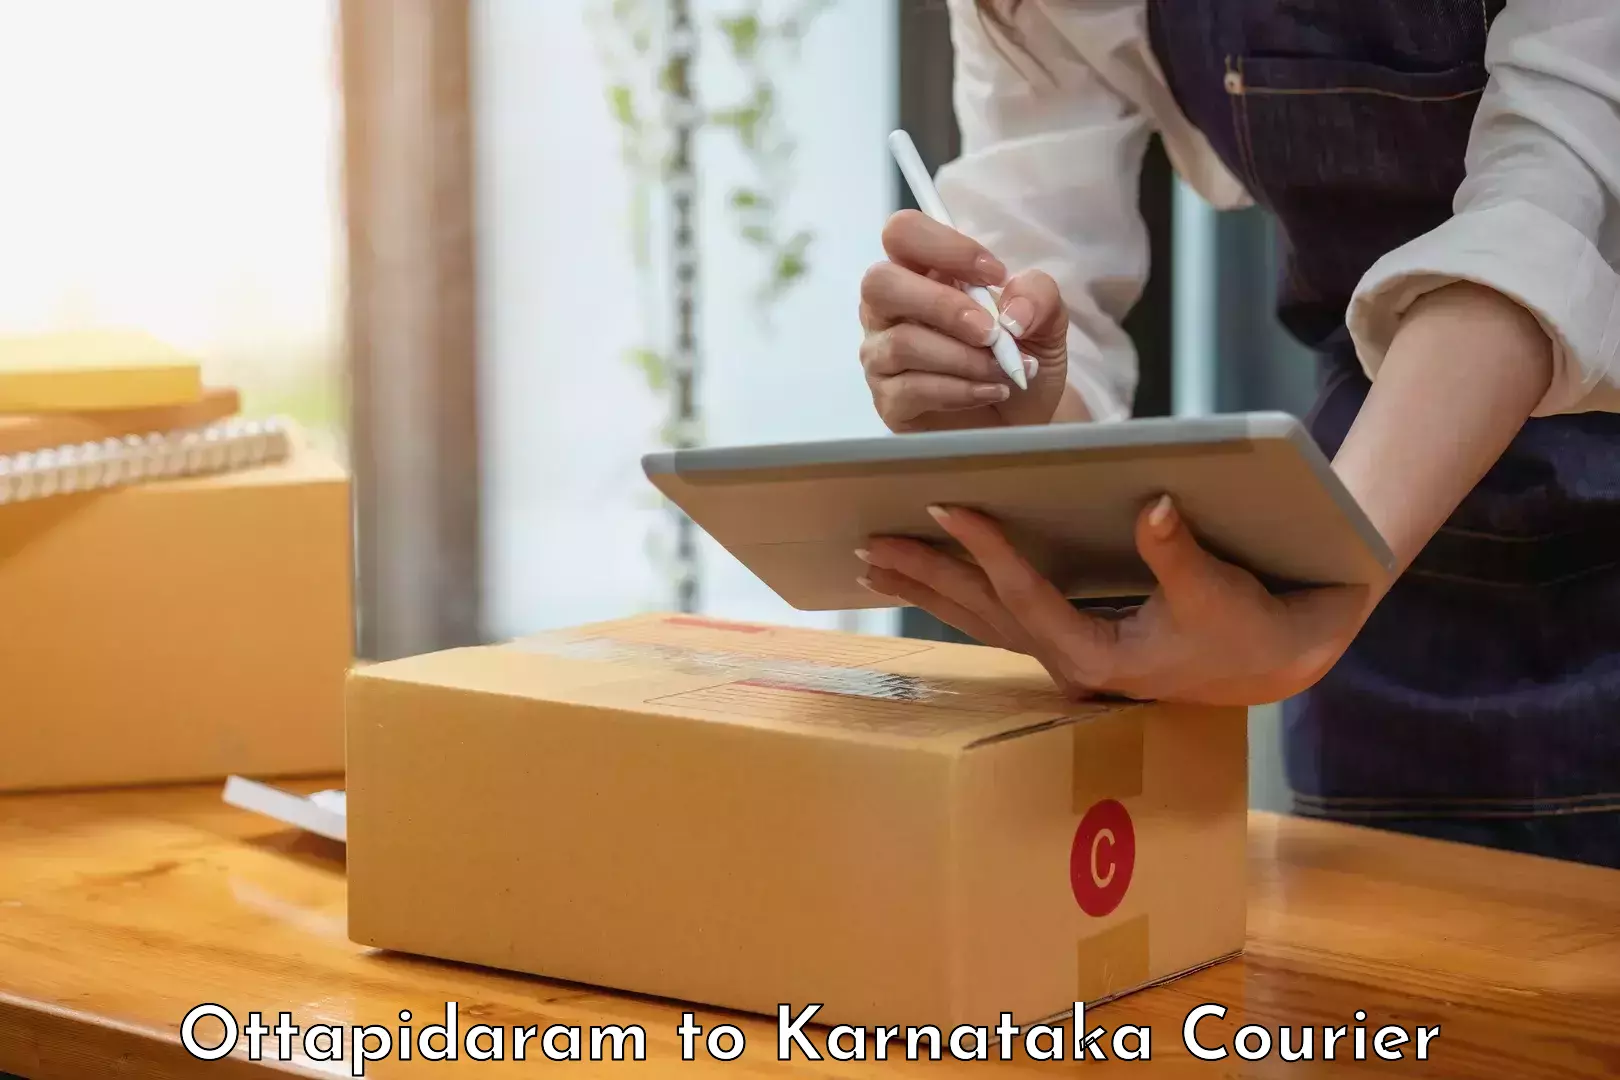 Lightweight parcel options Ottapidaram to Karnataka